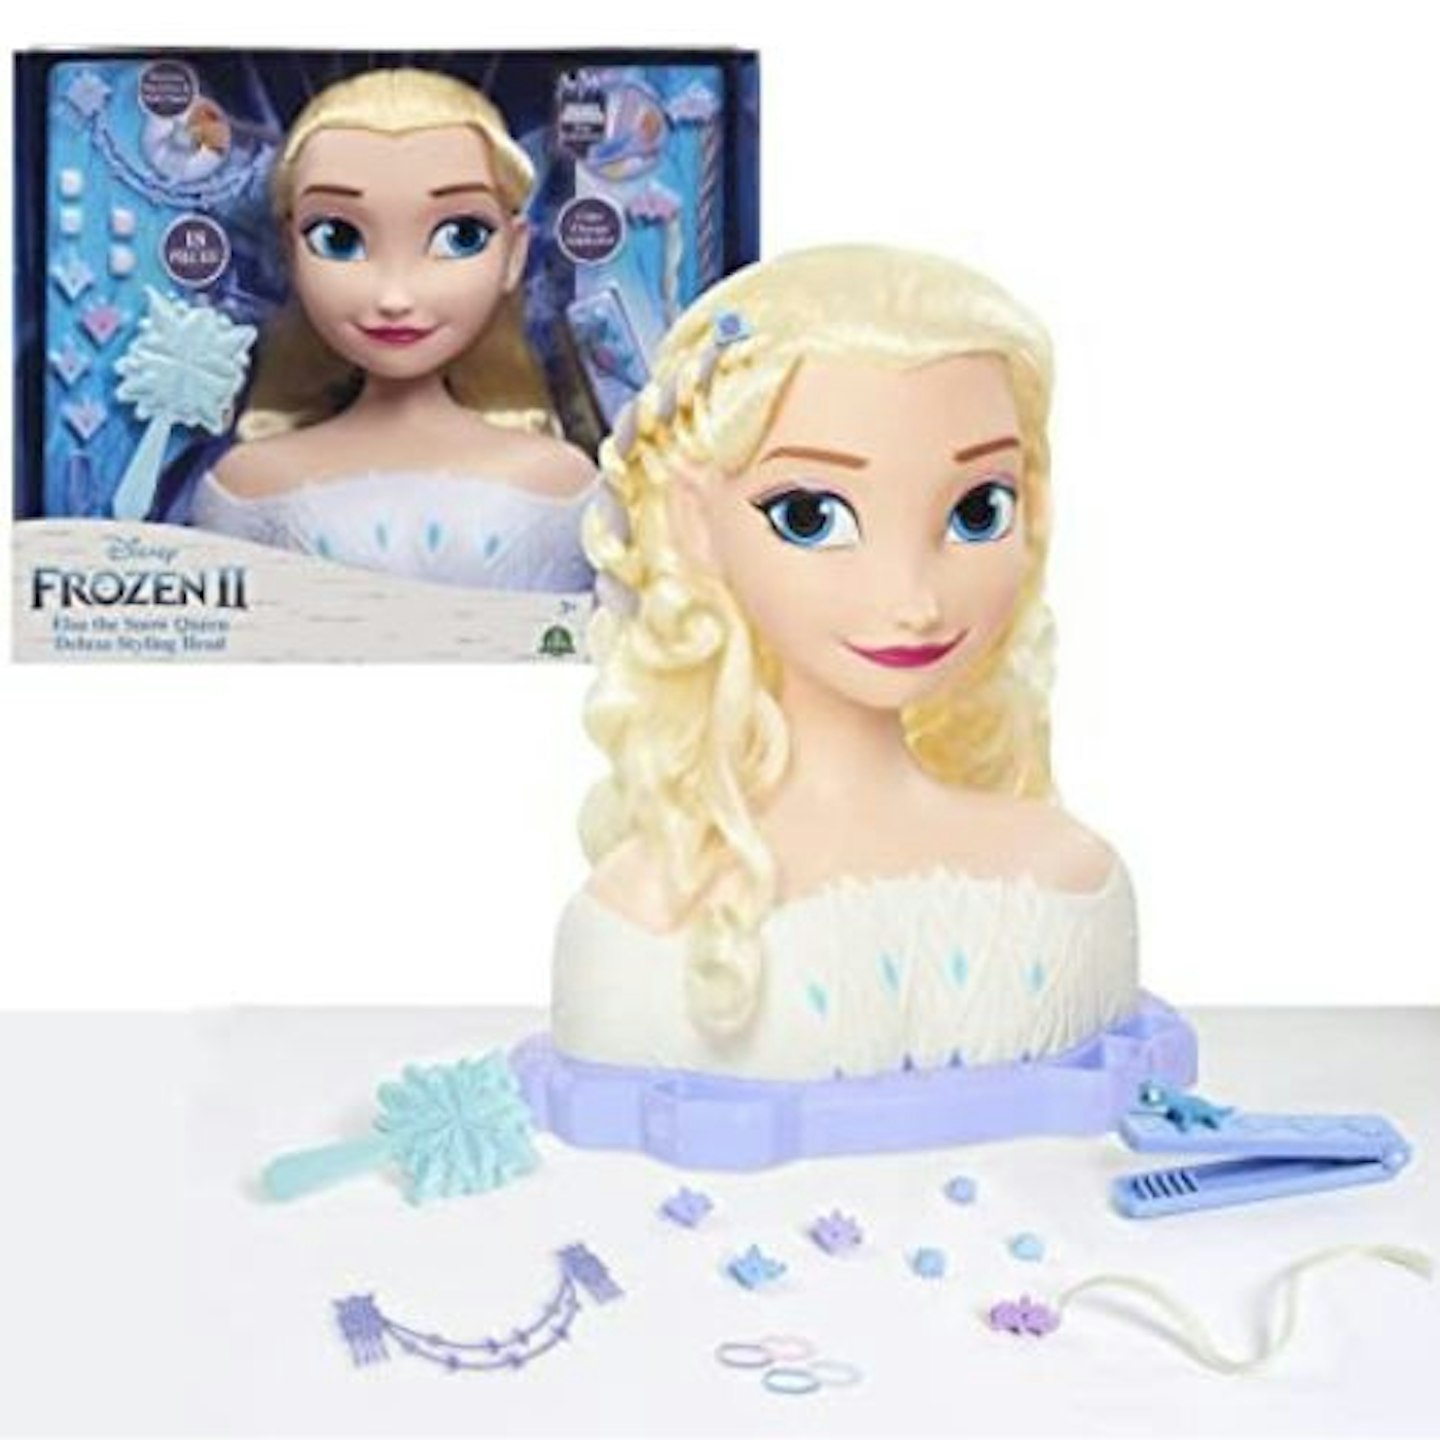 https://images.bauerhosting.com/affiliates/sites/12/motherandbaby/2022/08/JP-Disney-Styling-FRND6000-Frozen-2-Deluxe-Elsa-Styling-Head.jpg?auto=format&w=1440&q=80